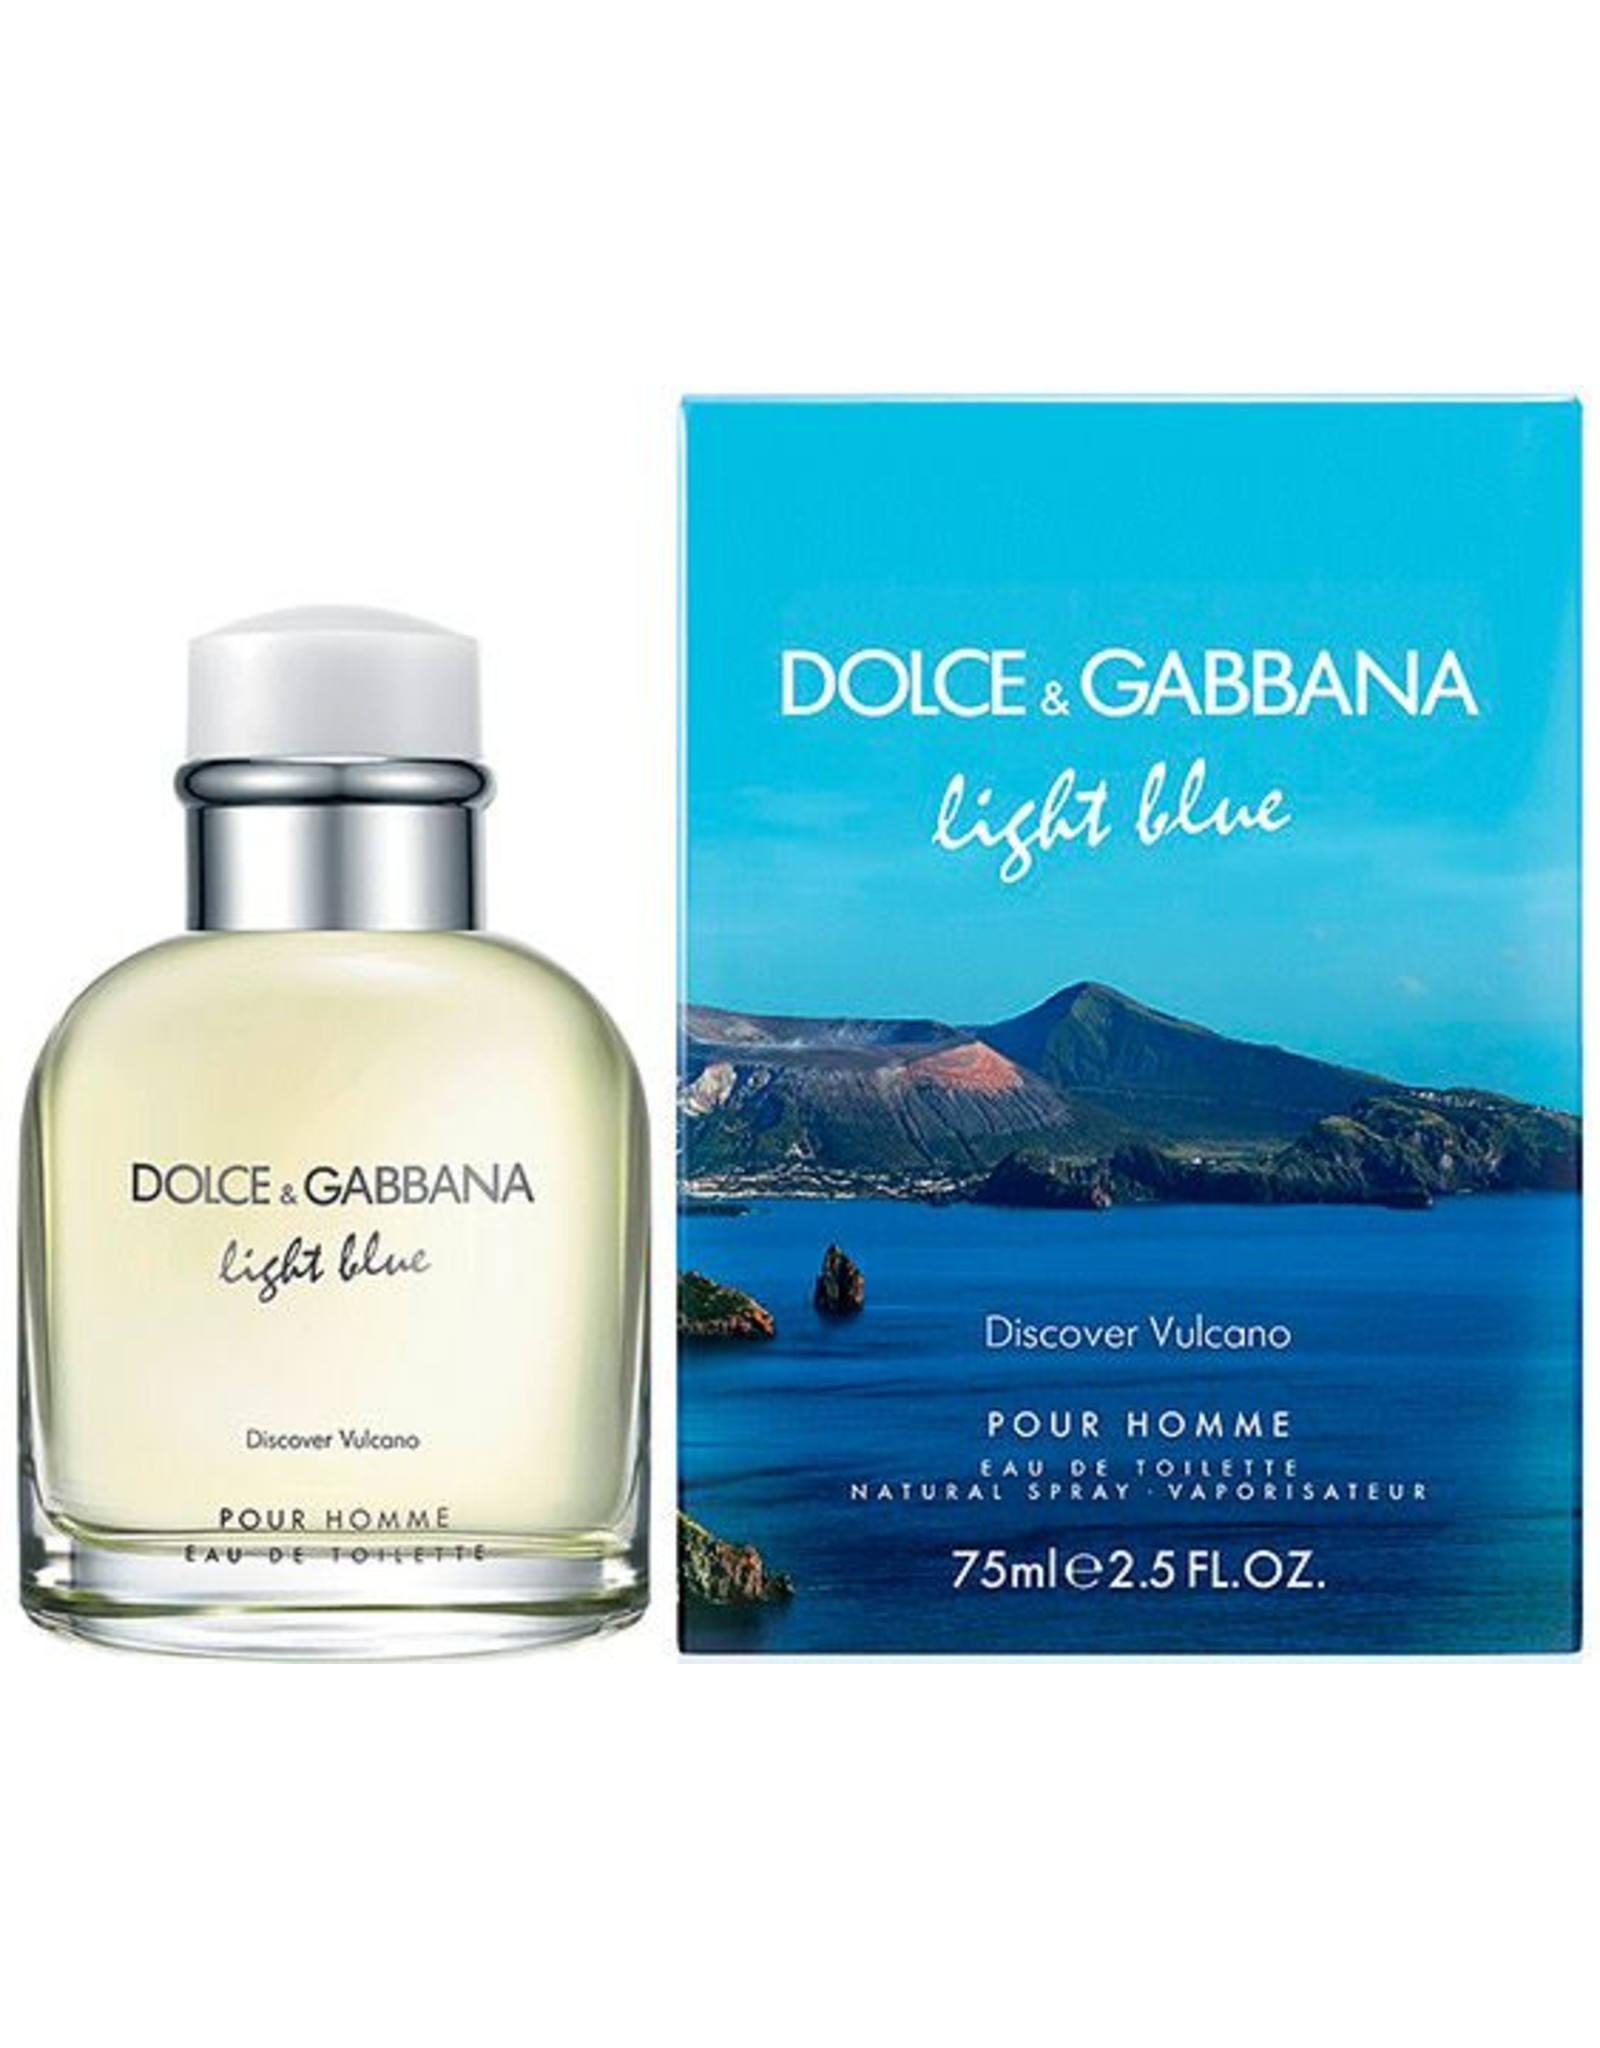 DOLCE & GABBANA DOLCE & GABBANA LIGHT BLUE DISCOVER VULCANO POUR HOMME